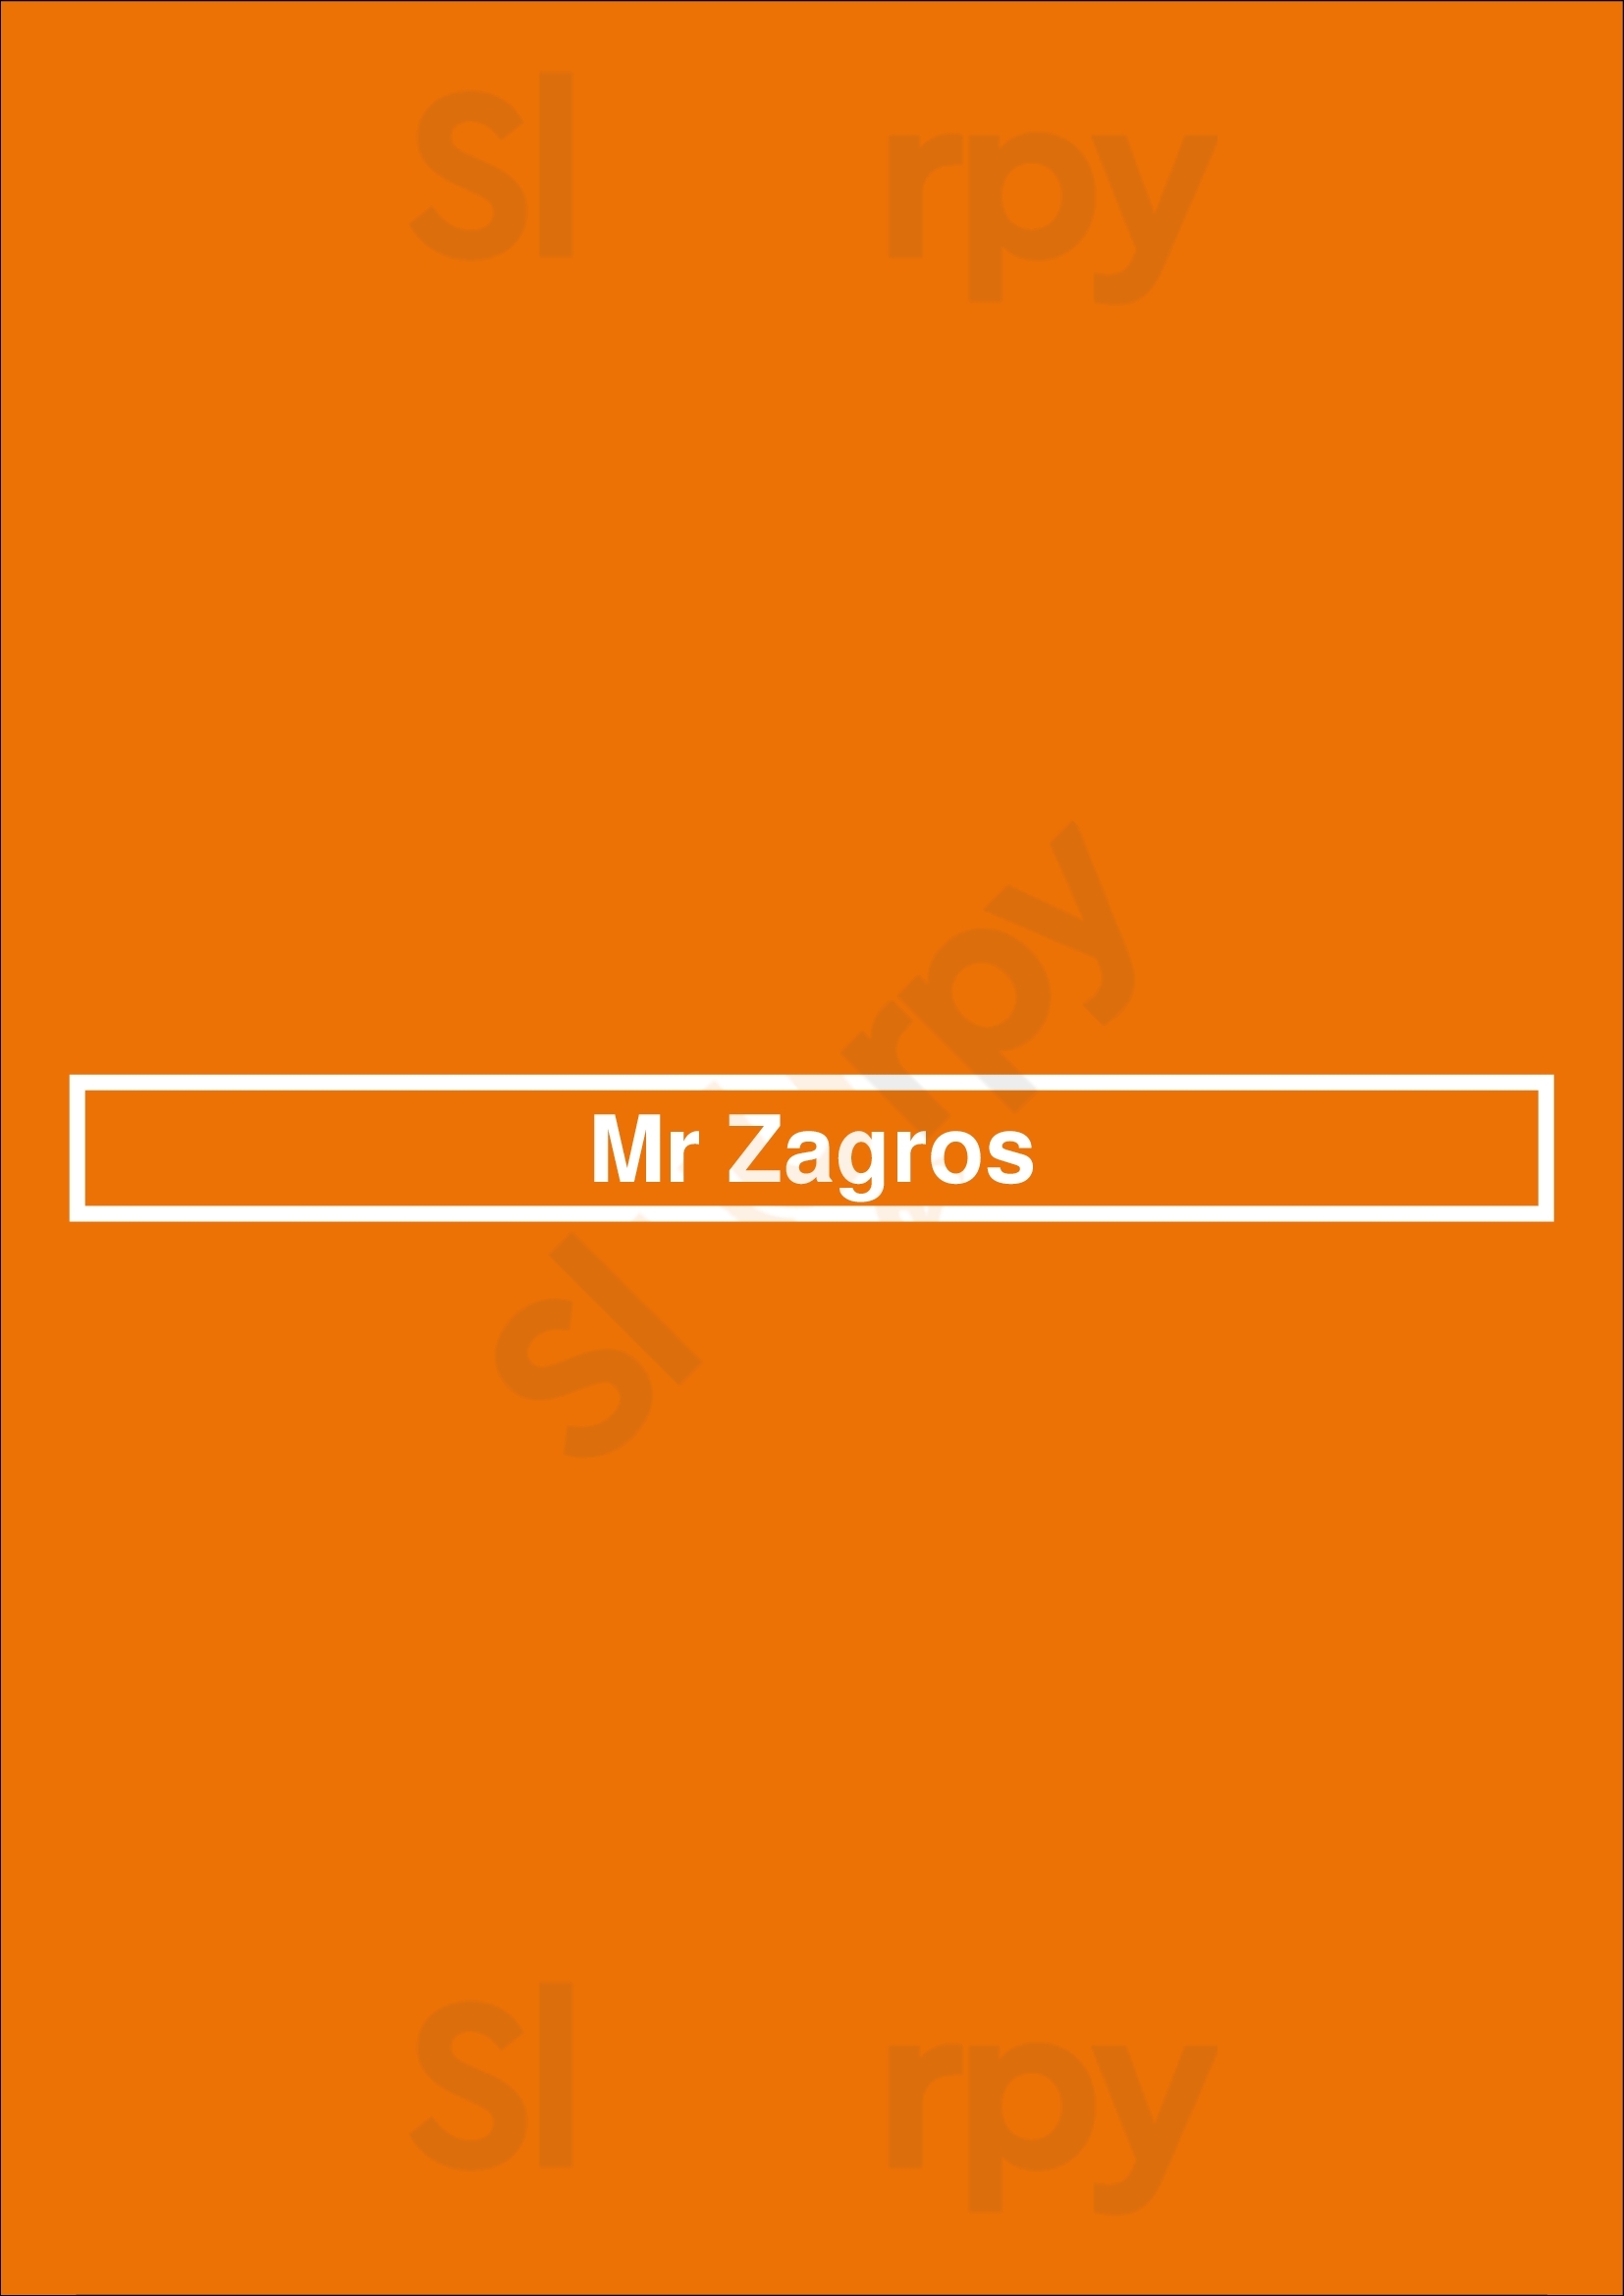 Mr Zagros Mississauga Menu - 1